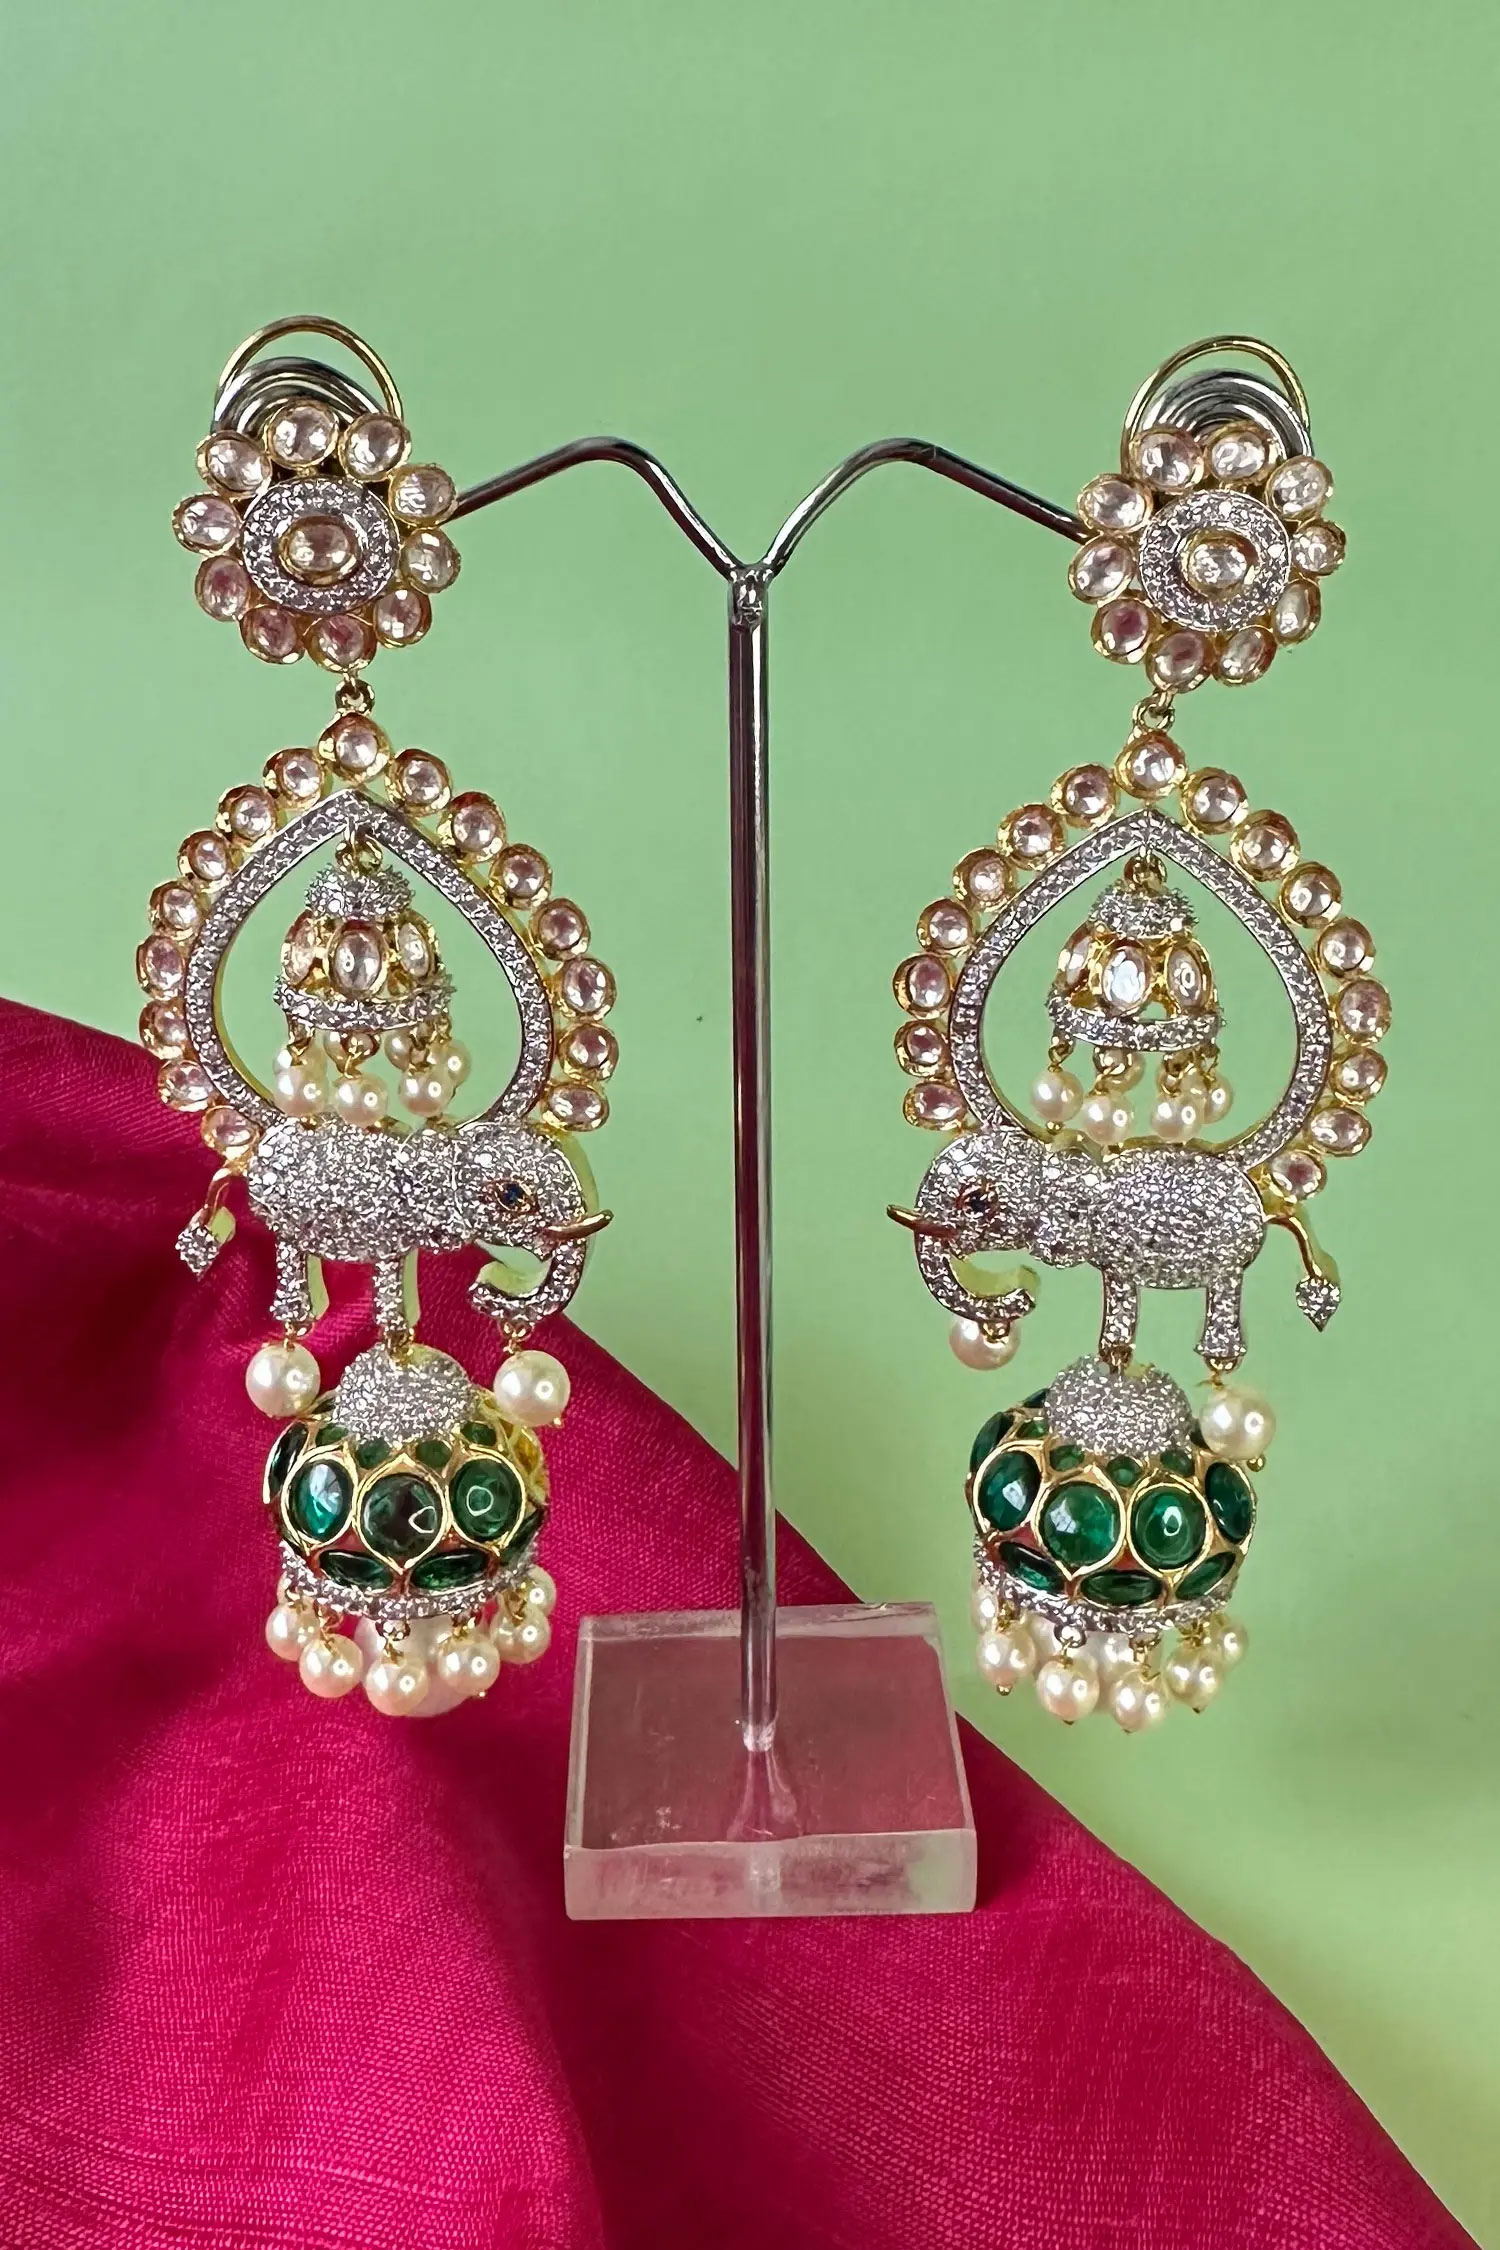 Buy 50 Designs Online  BlueStonecom  Indias 1 Online Jewellery Brand